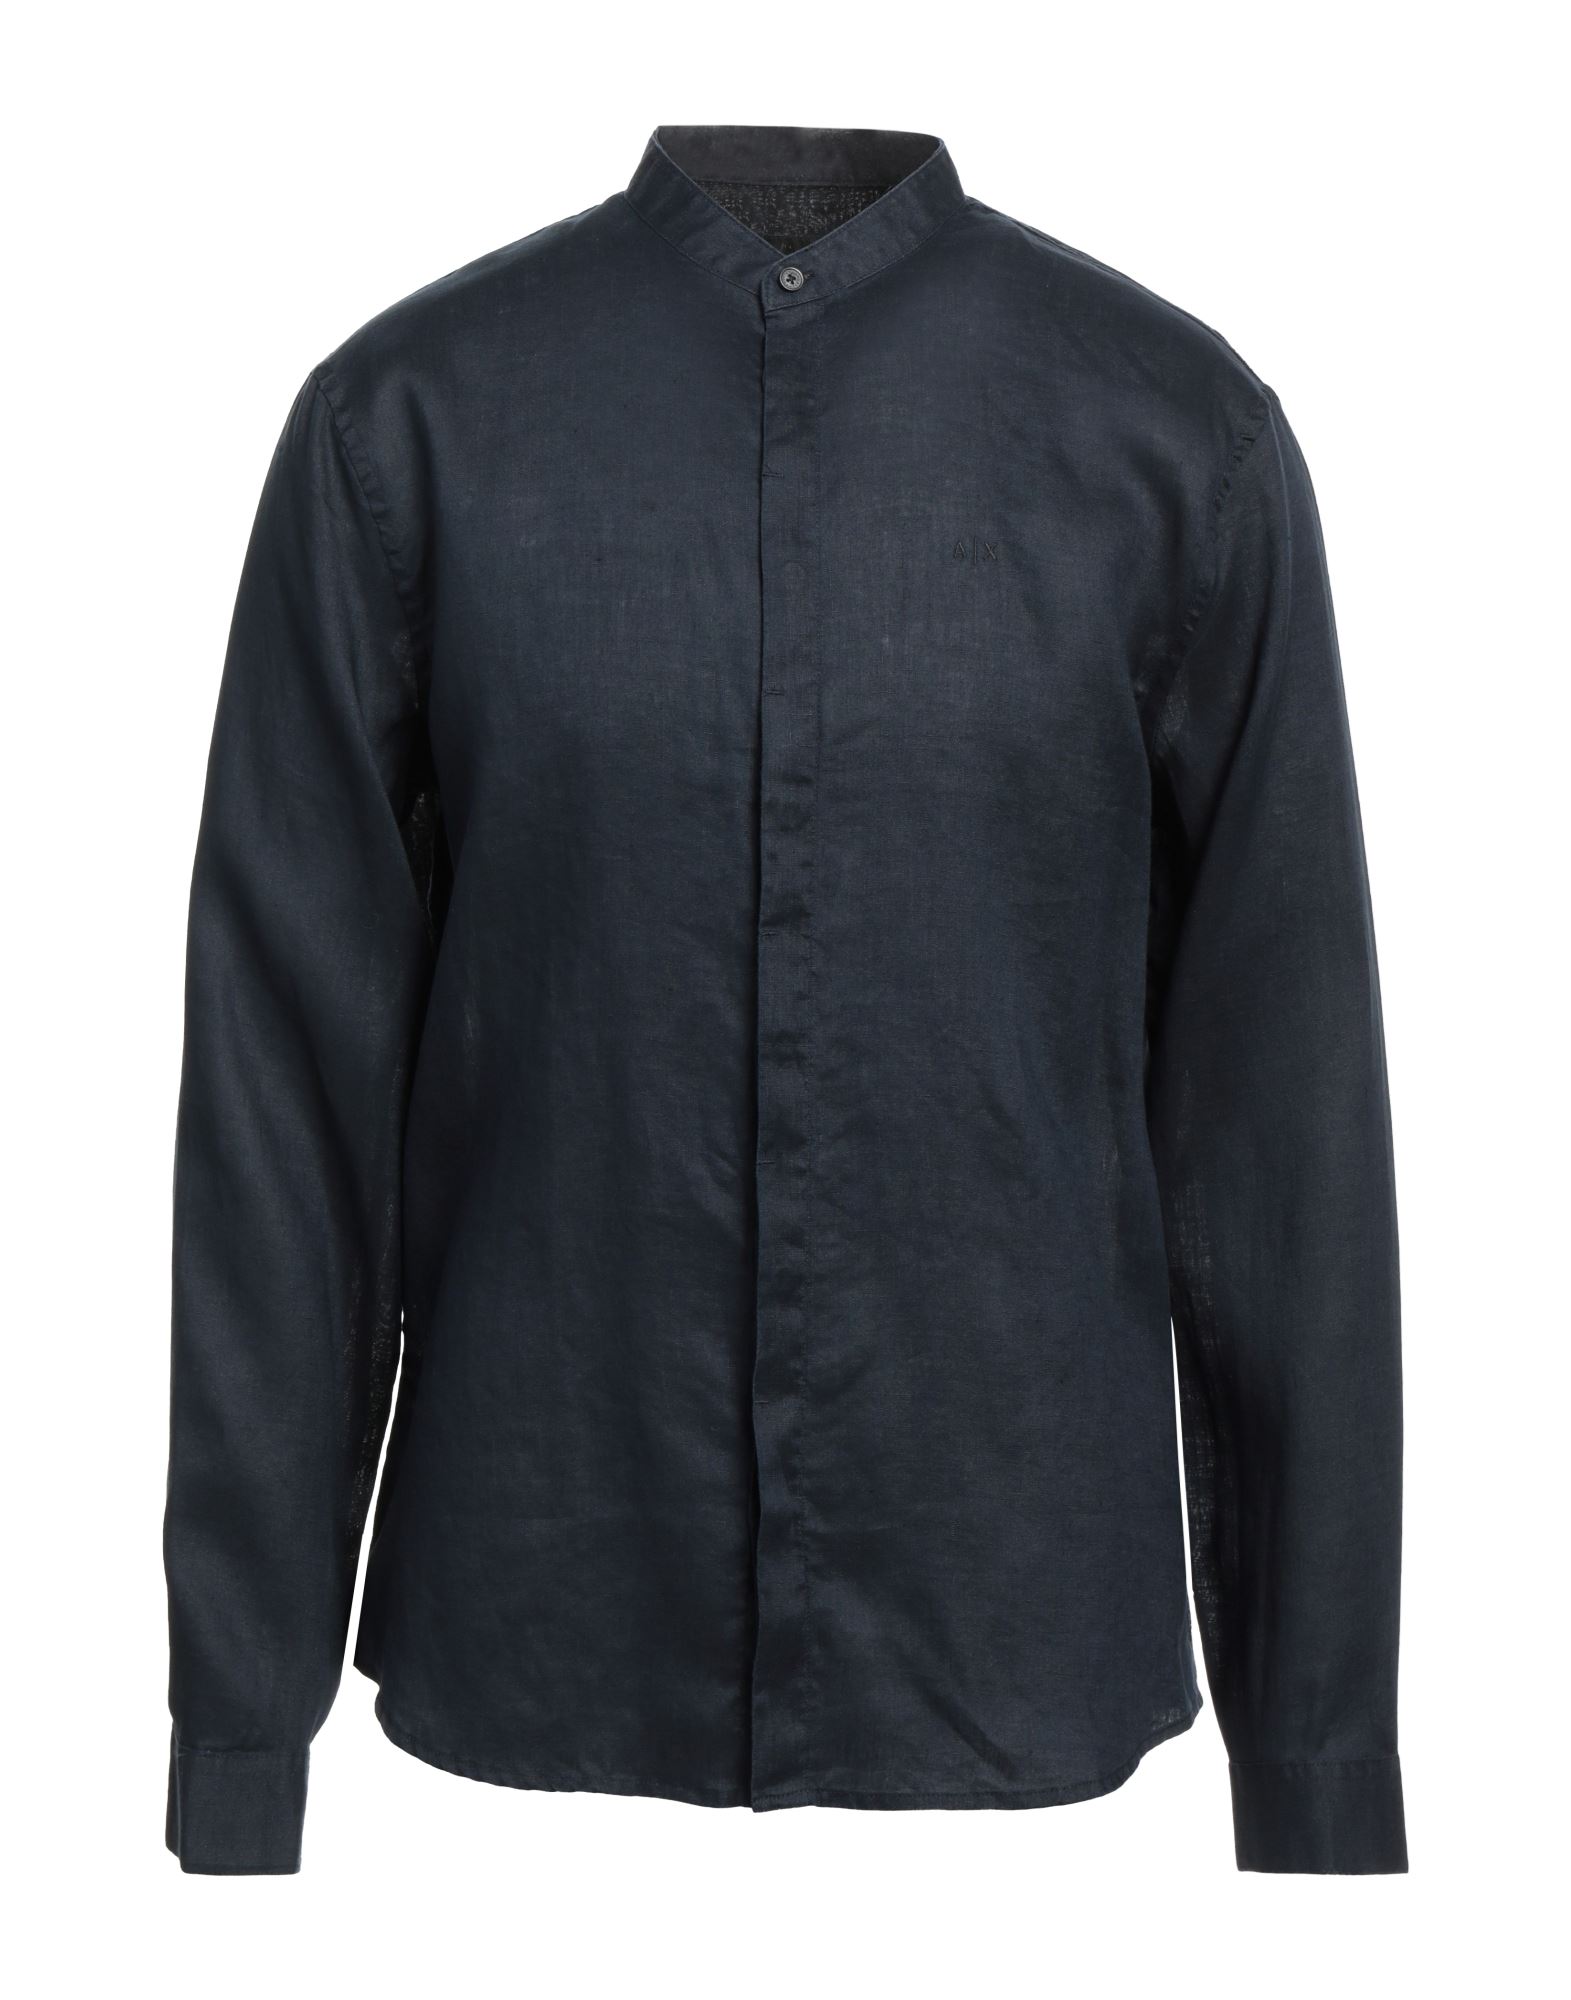 Armani Exchange Plain Shirt Navy Blue Linen